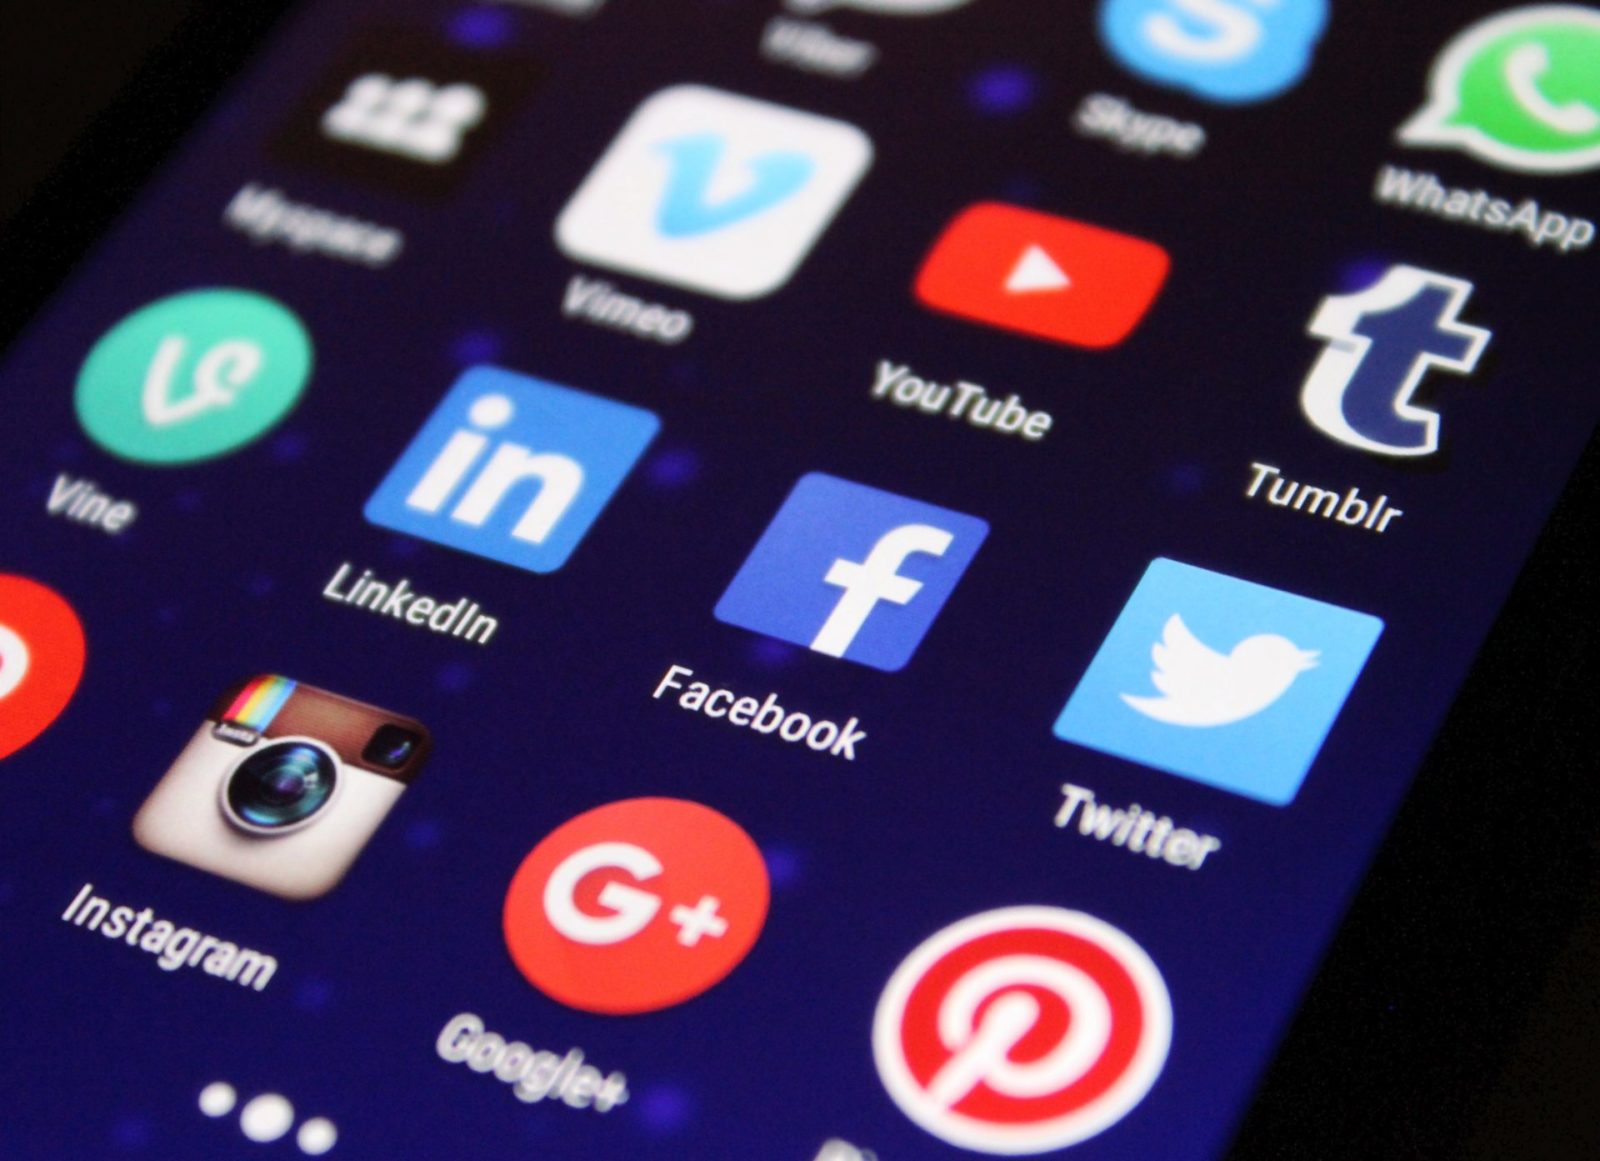 Health risks of social media - fact or fiction?